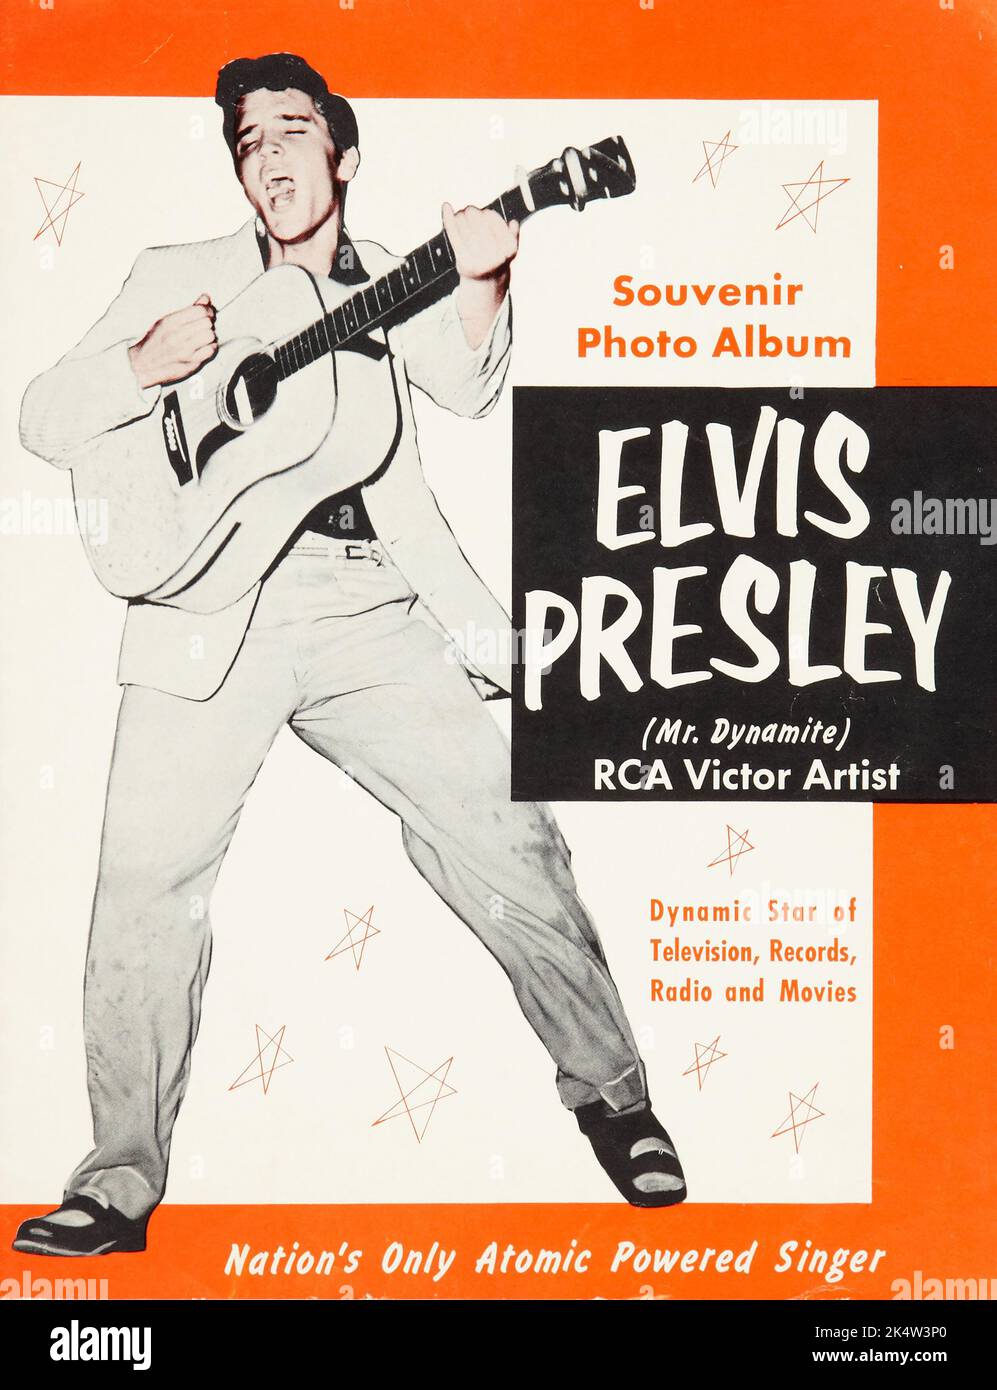 Elvis Presley (Mr Dynamite) RCA Victor Artist - souvenir photo album, 1950s. Stock Photo